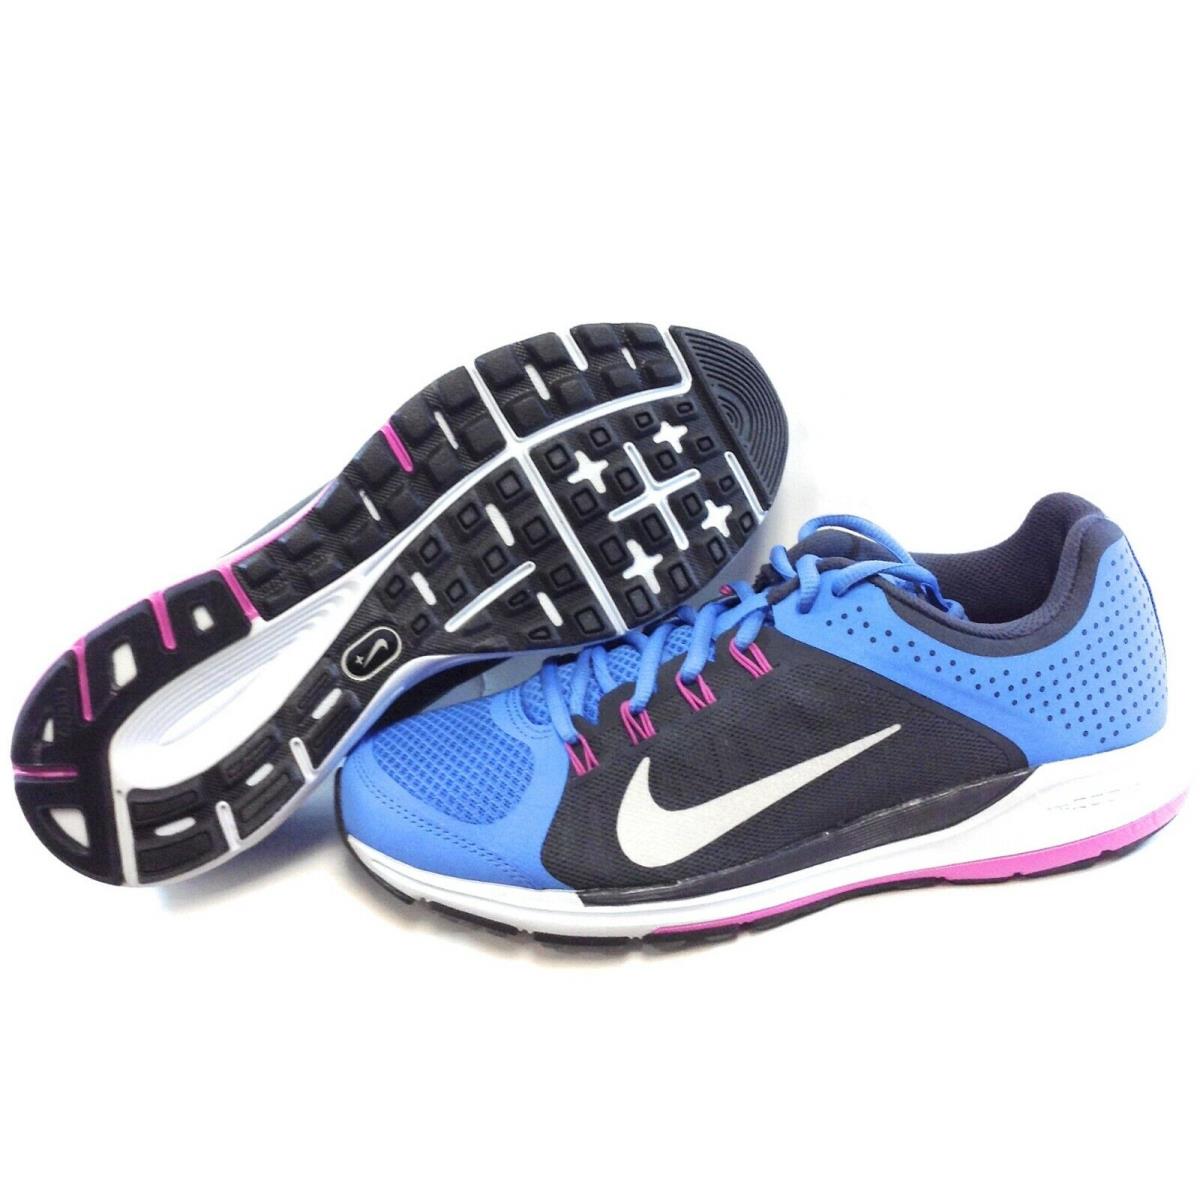 Womens Nike Zoom Elite +6 554728 400 Blue Black 2012 Deadstock Sneakers Shoes - Blue